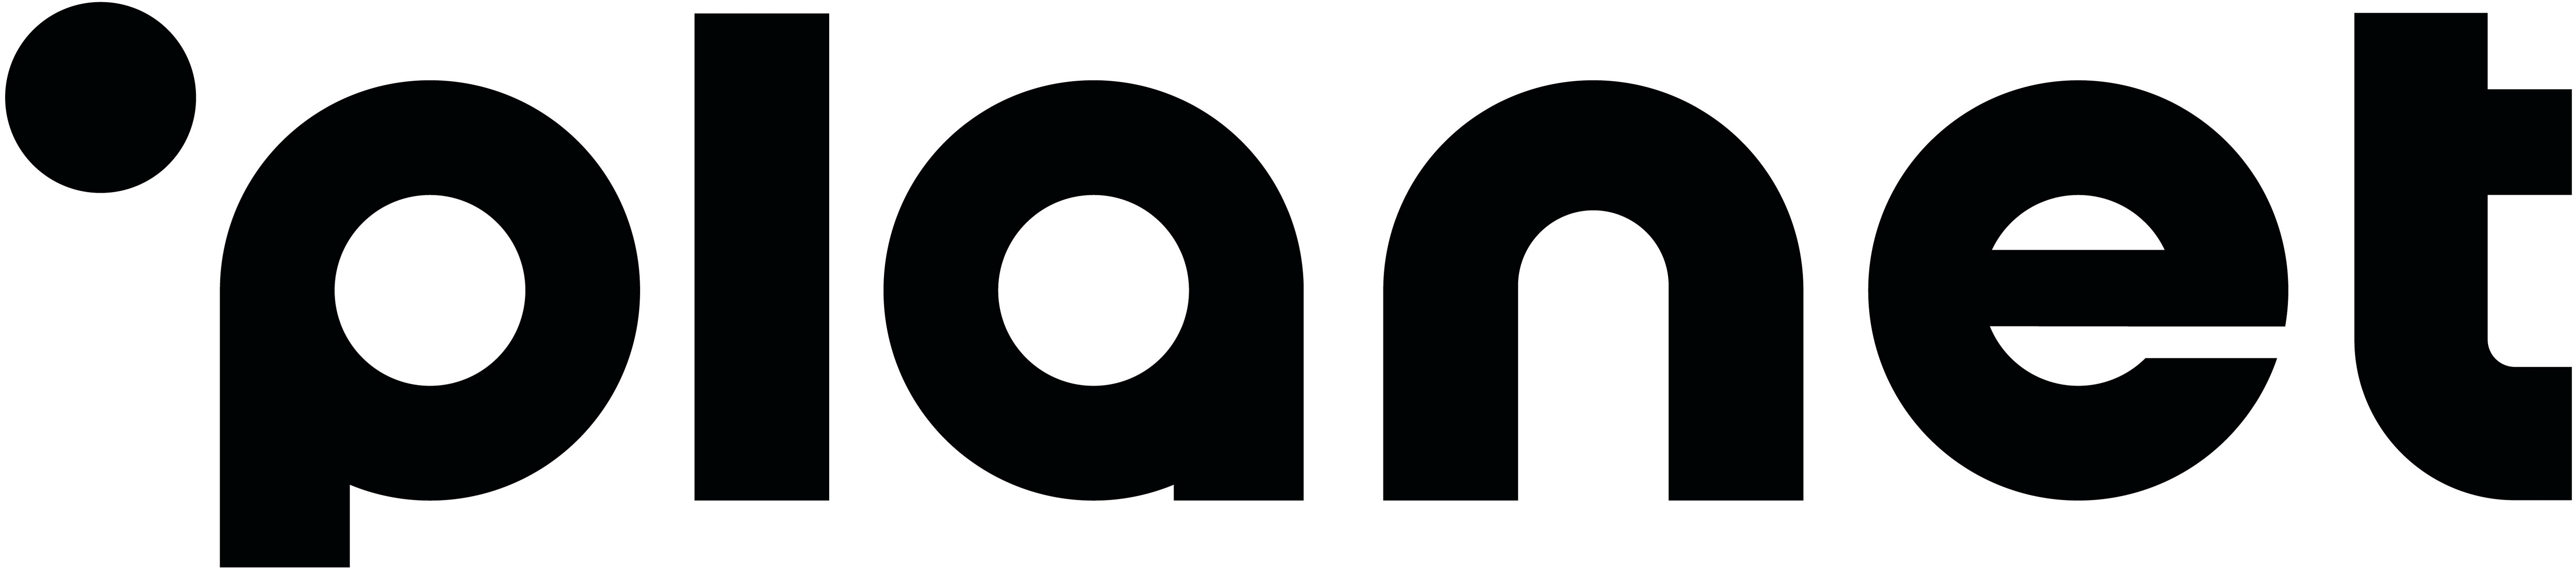 Planet sin logo i sort og hvit